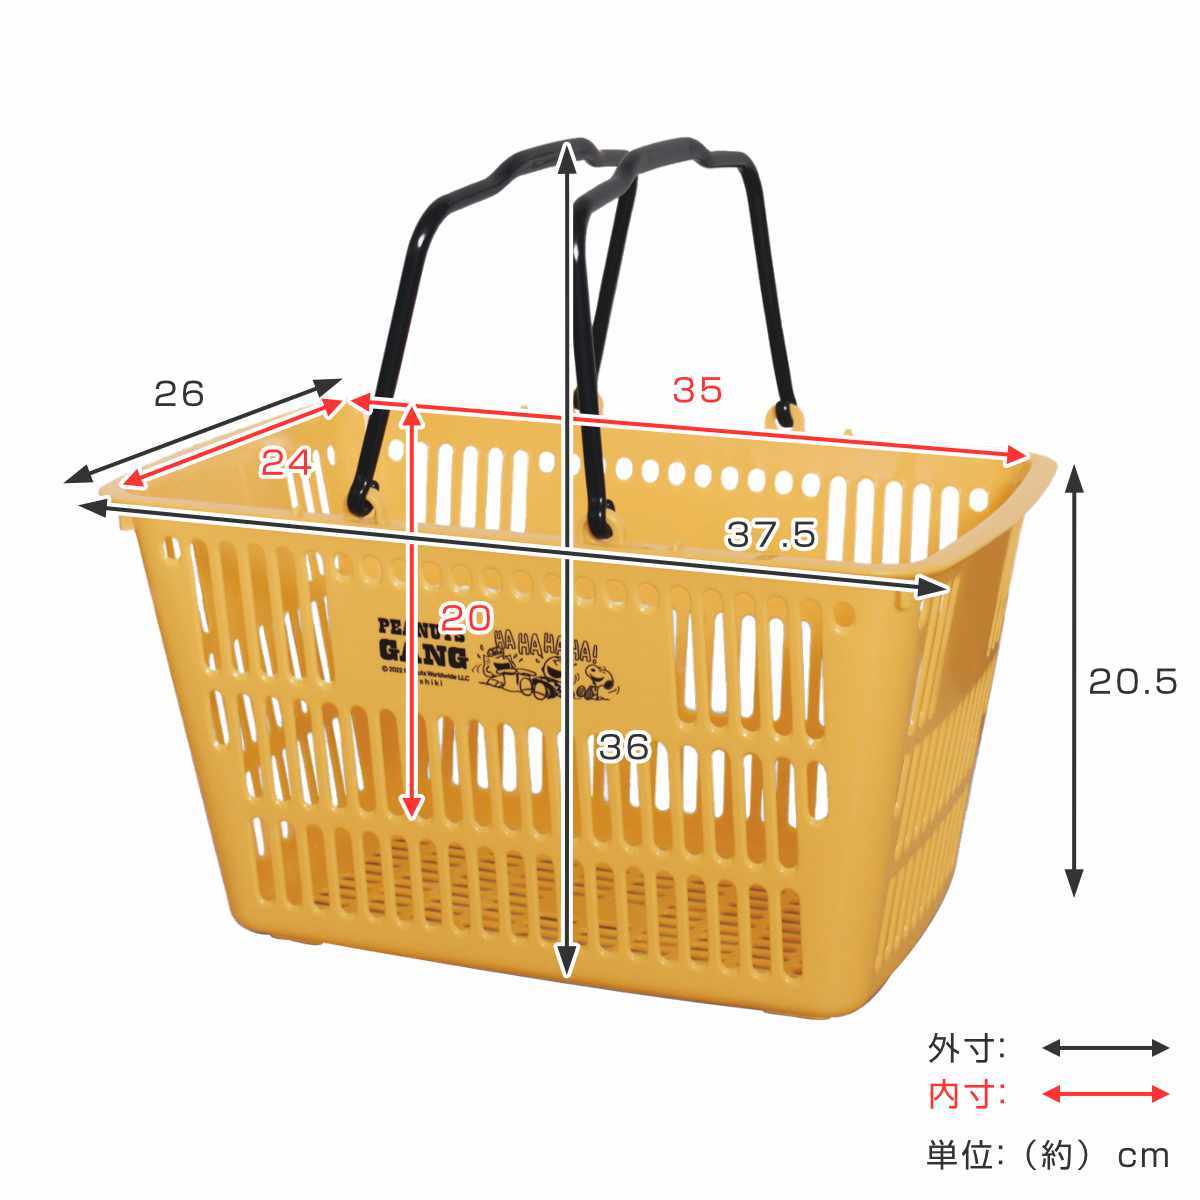  basket Snoopy Mini eko basket ( shopping basket storage shopping basket reji basket reji basket Mini size eko-bag basket made in Japan SNOOPY )